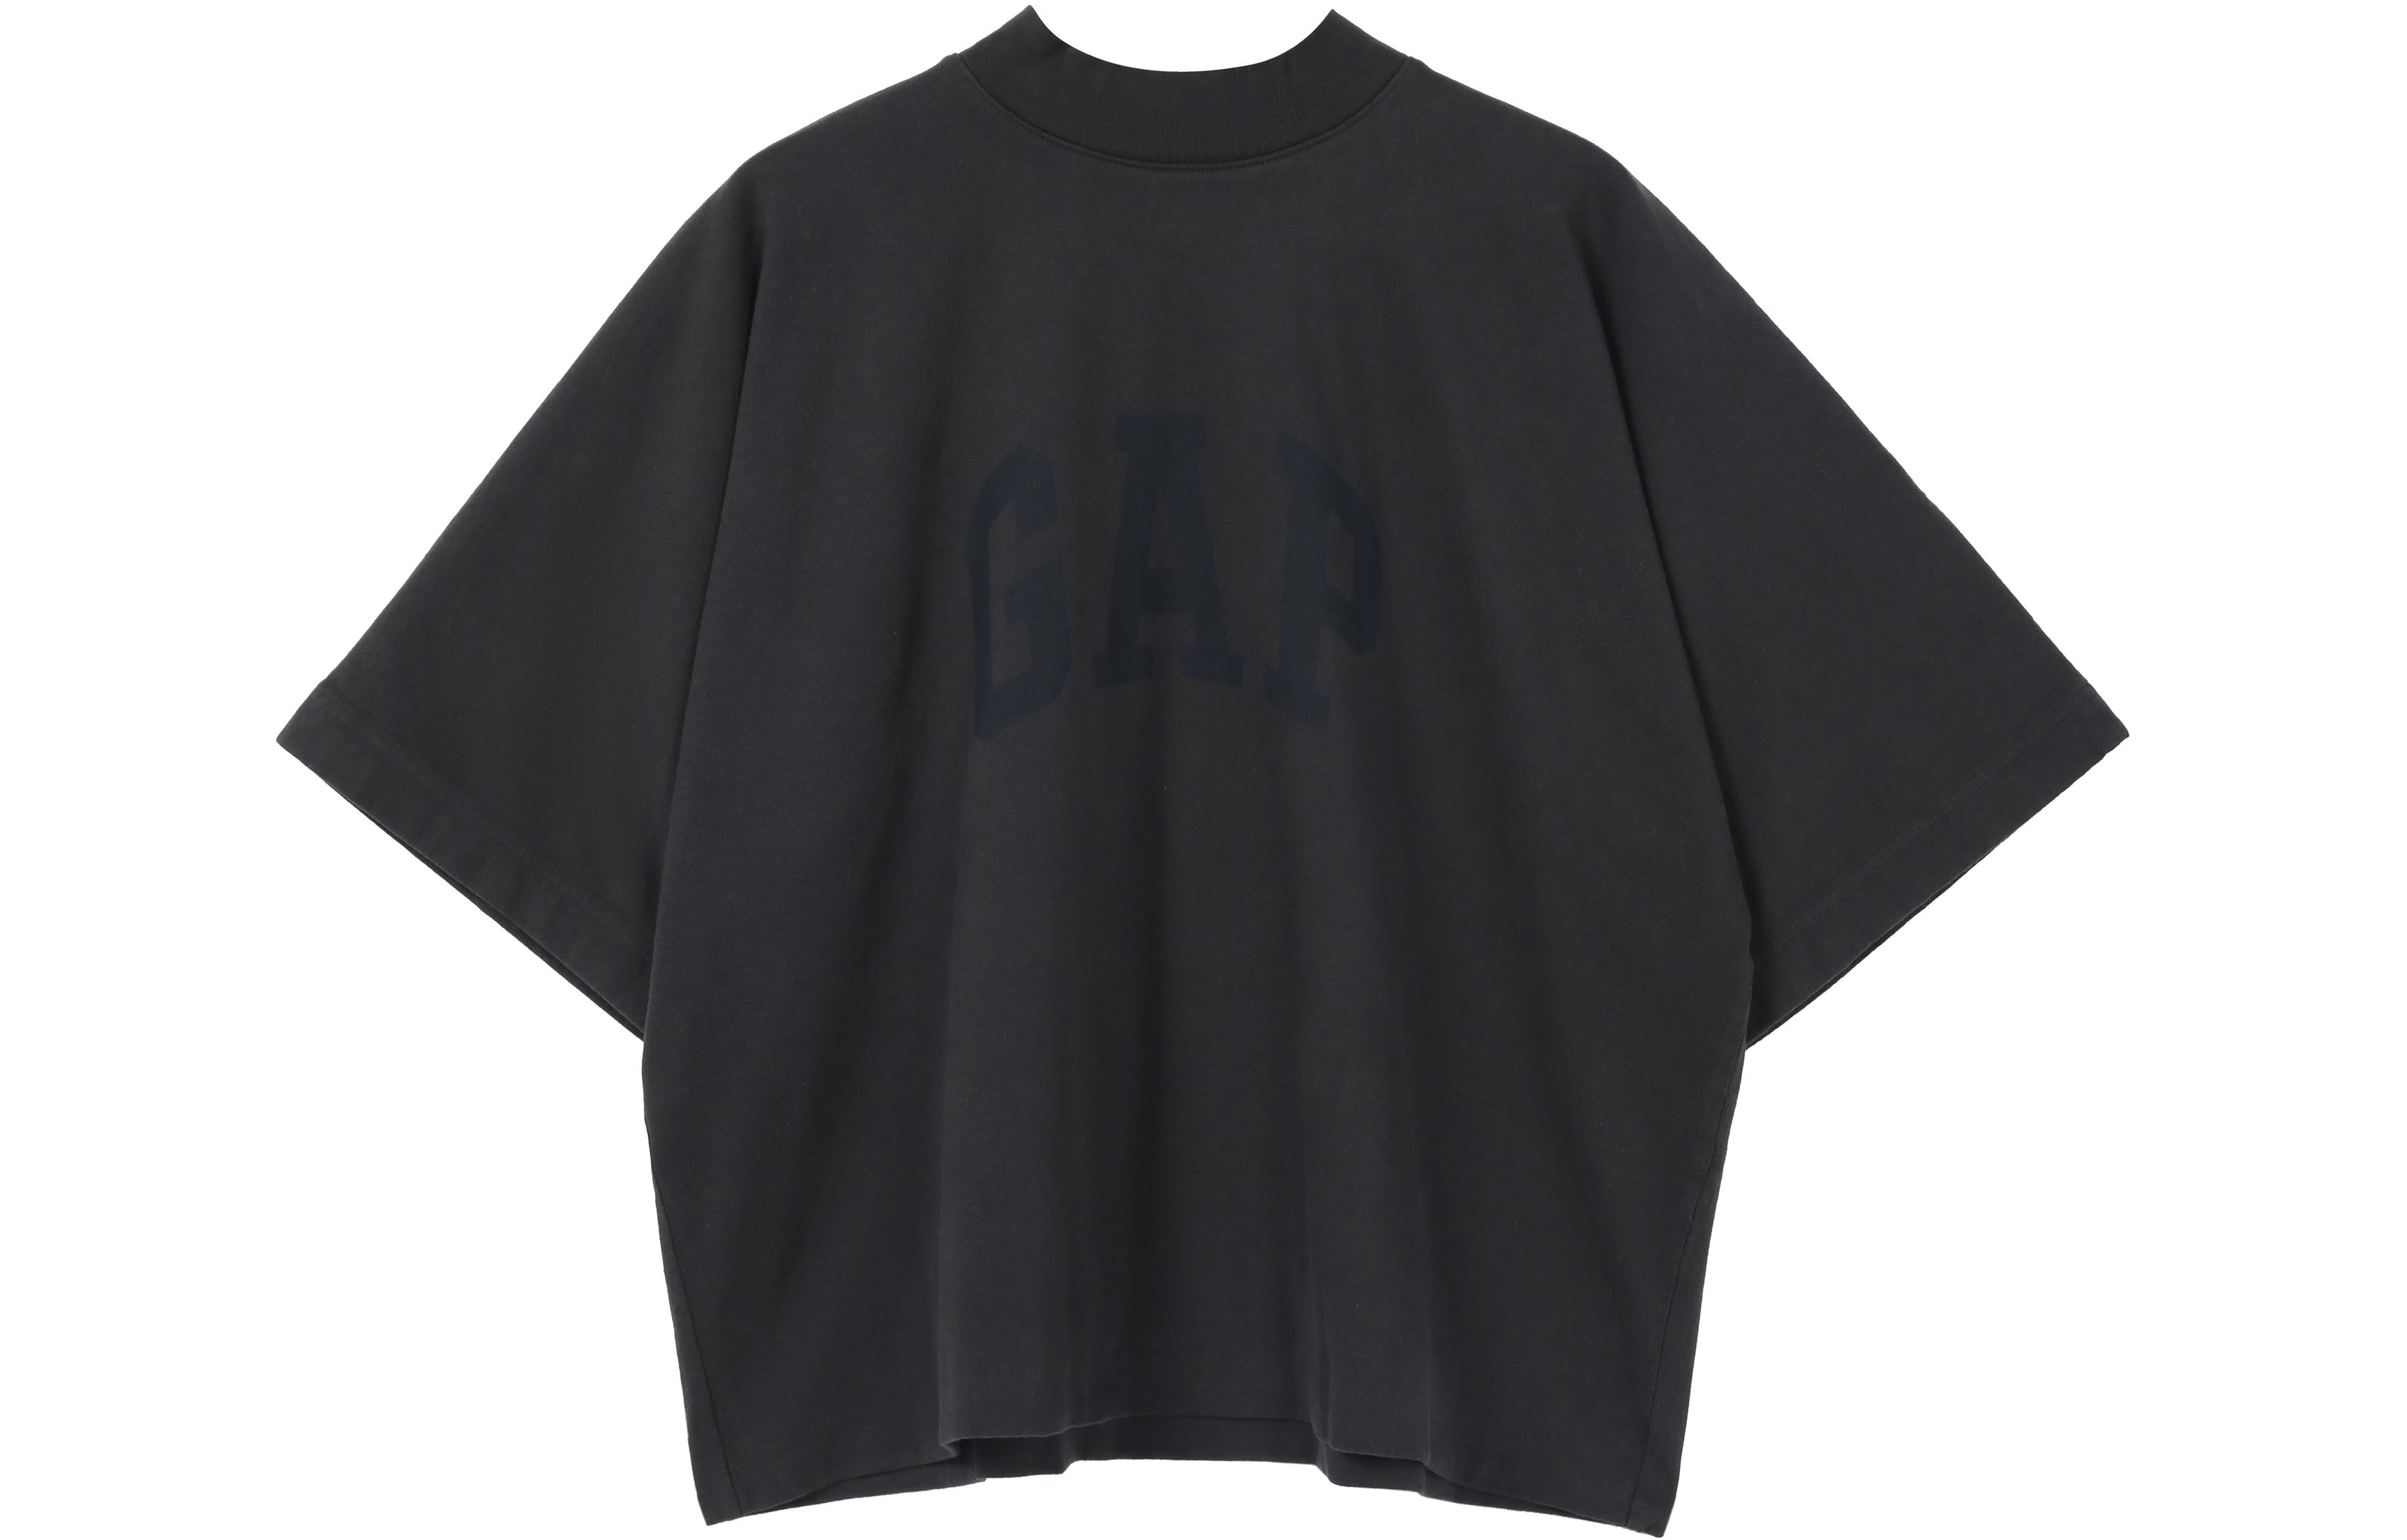 Yeezy Gap Engineered By Balenciaga Dove Sleeve Tee Black - POIZON